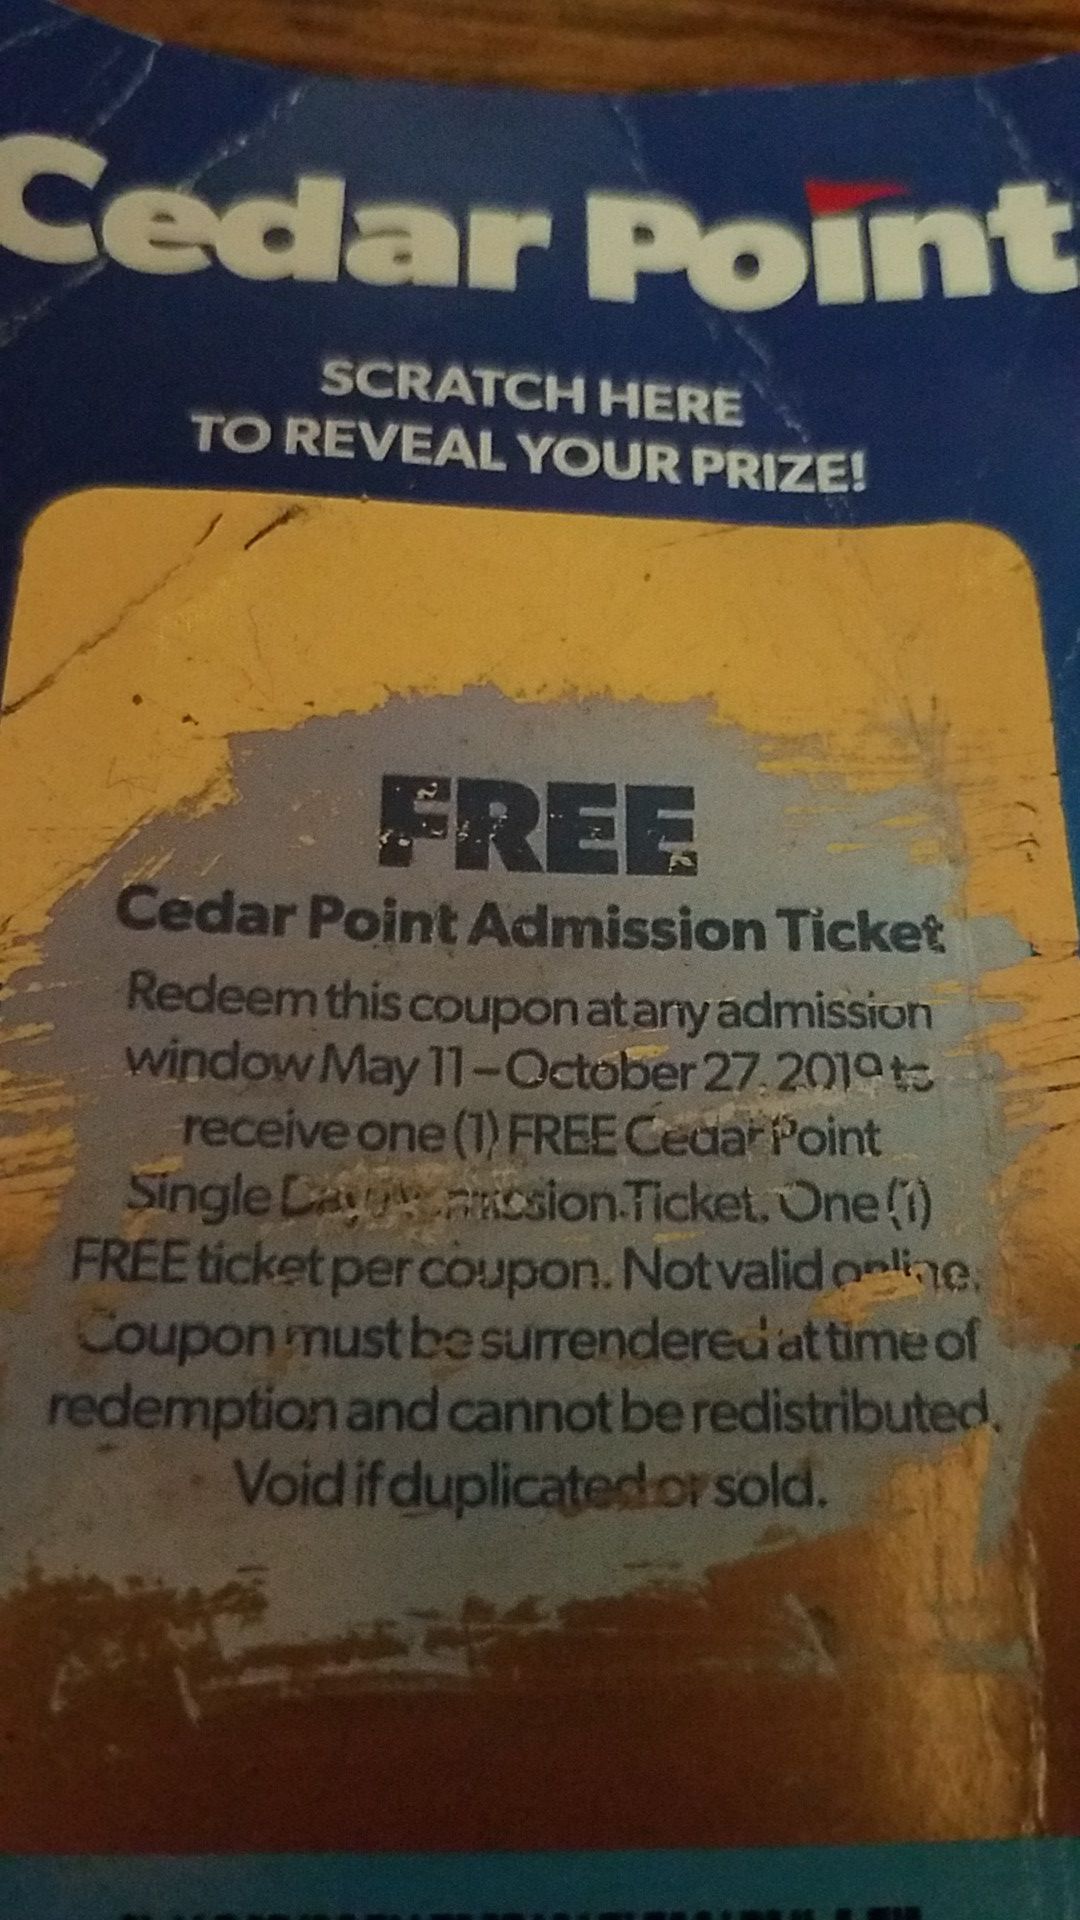 $25 cedar point admission ticket